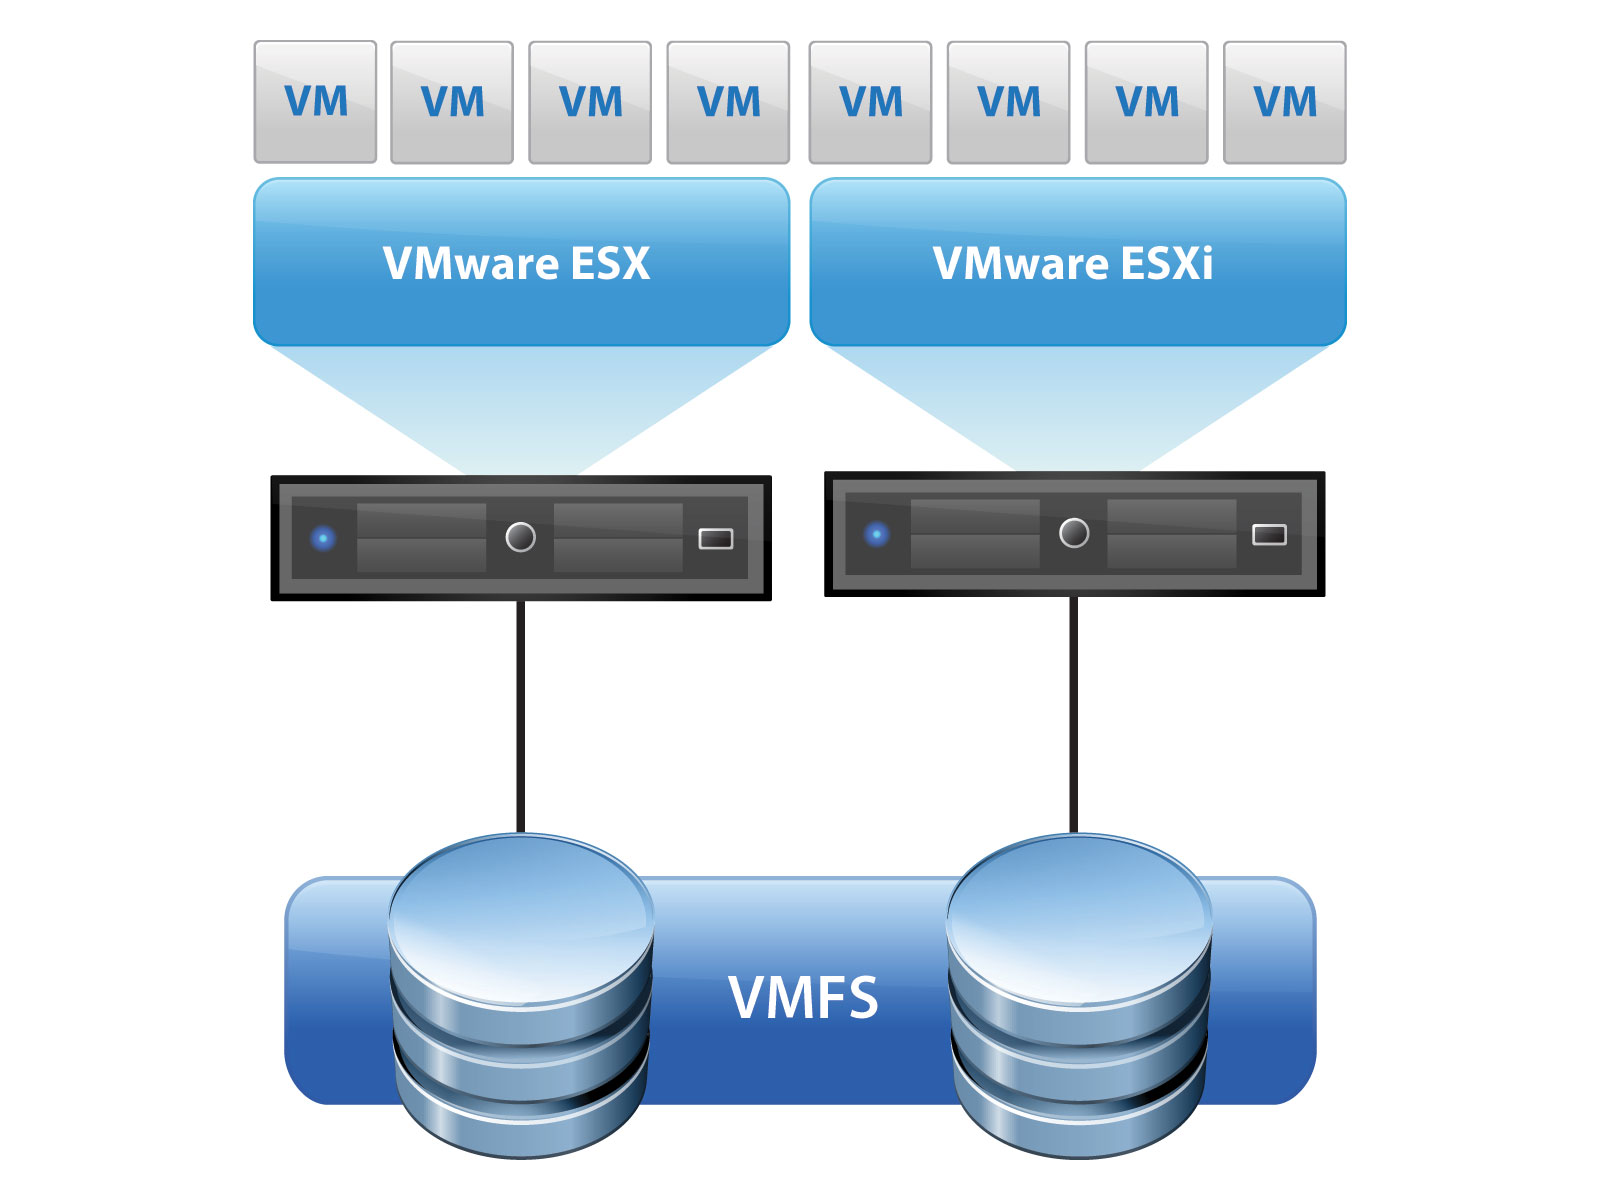 Vm hosting. Файловая система VMWARE VSPHERE. Файловая система VMFS. Сервер виртуальных машин. Виртуализация VMWARE.